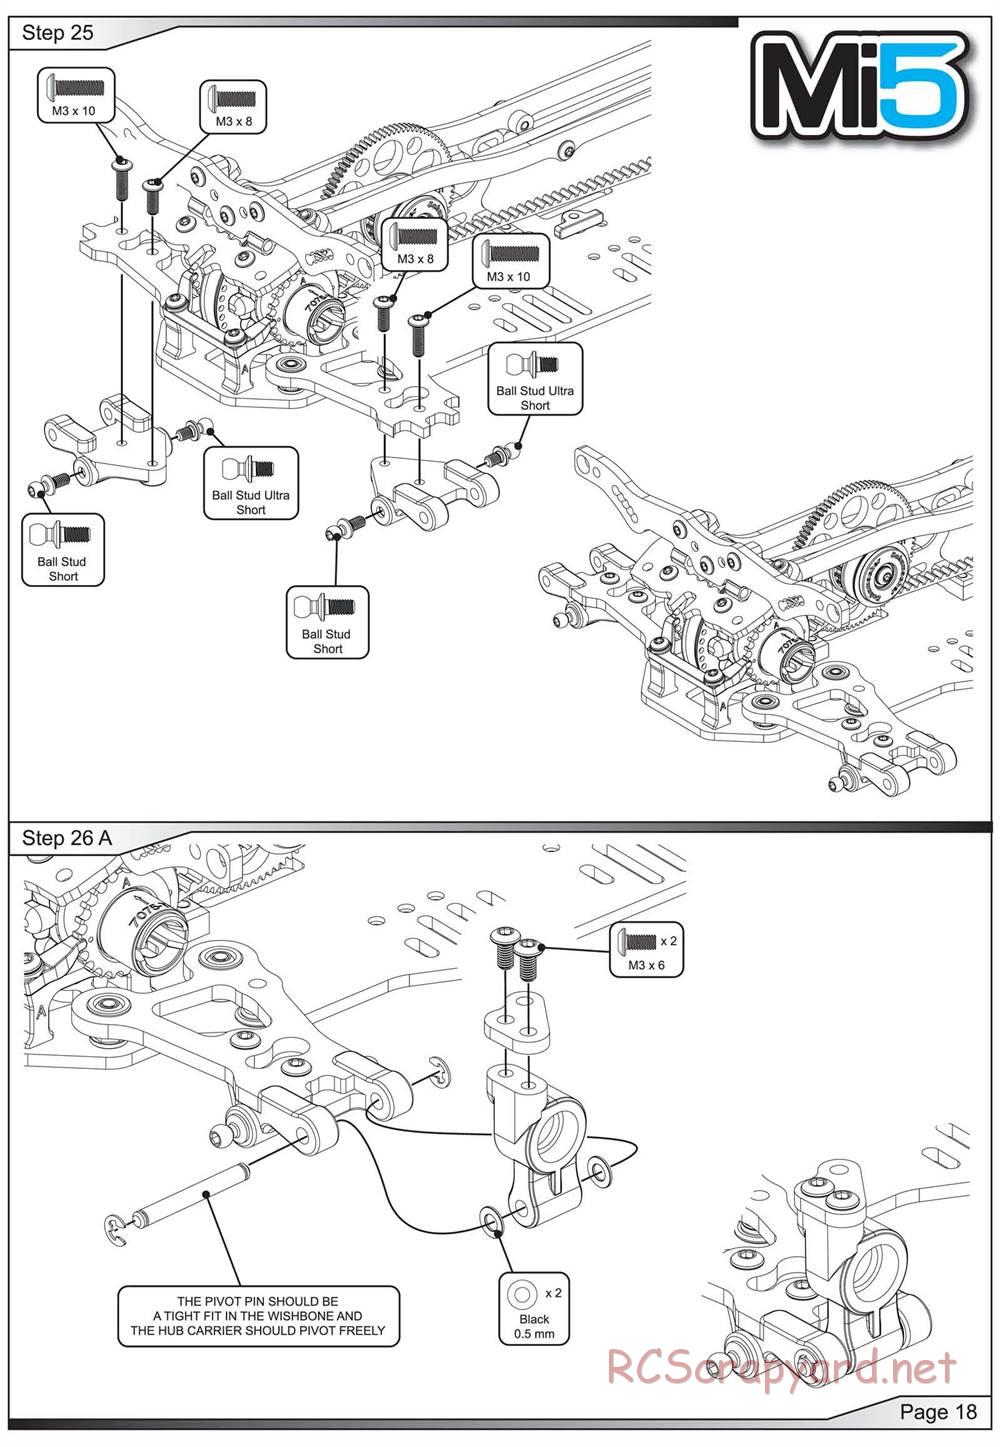 Schumacher - Mi5 - Manual - Page 19